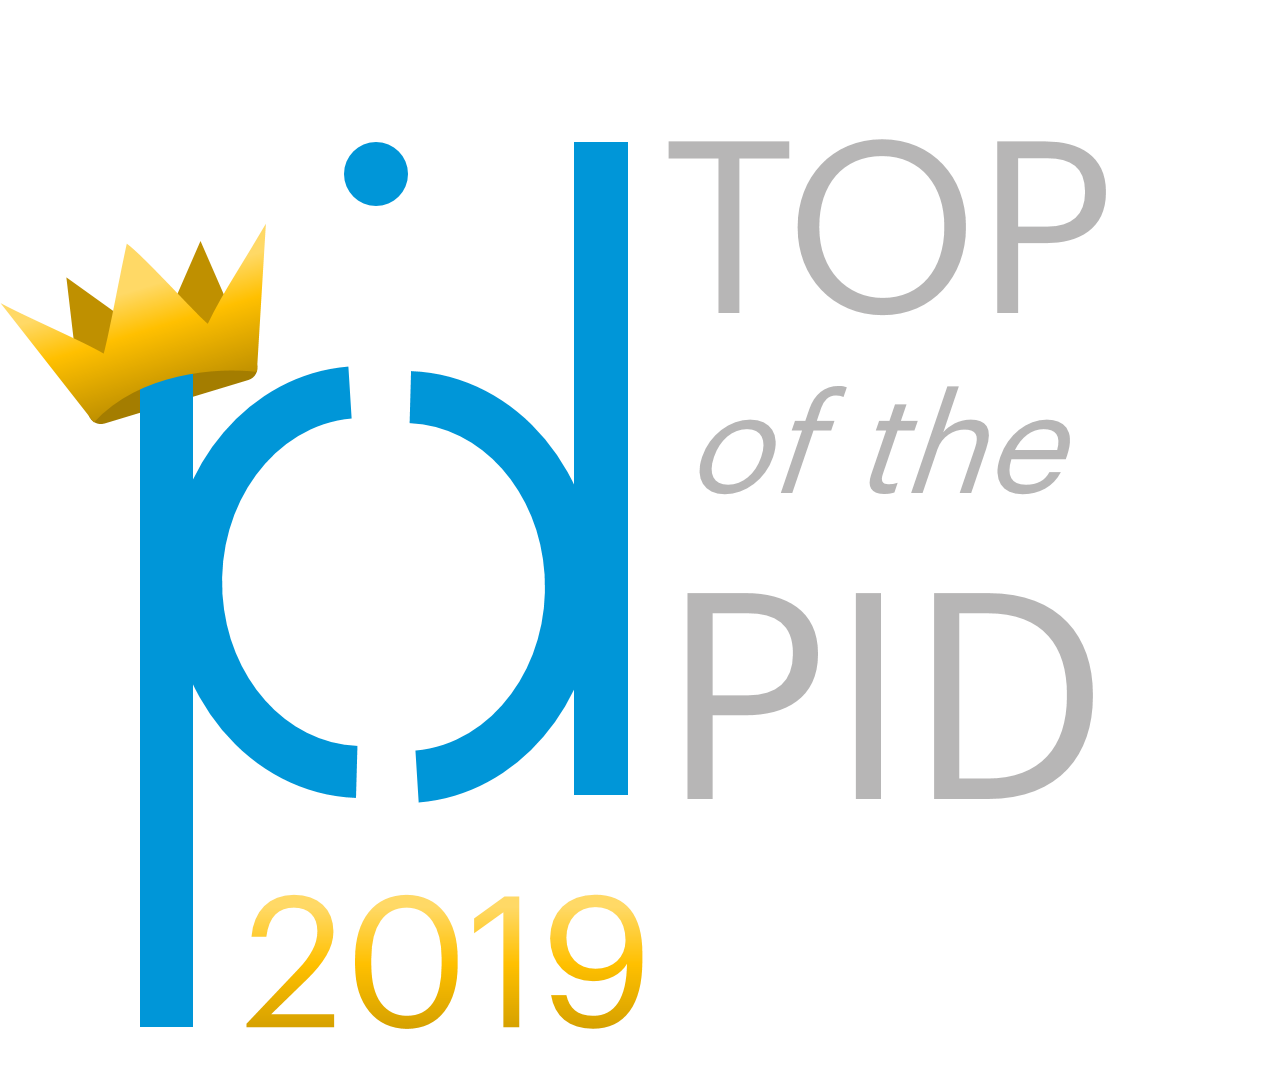 IMPRESA 4.0: al via il premio "TOP OF THE PID 2019"